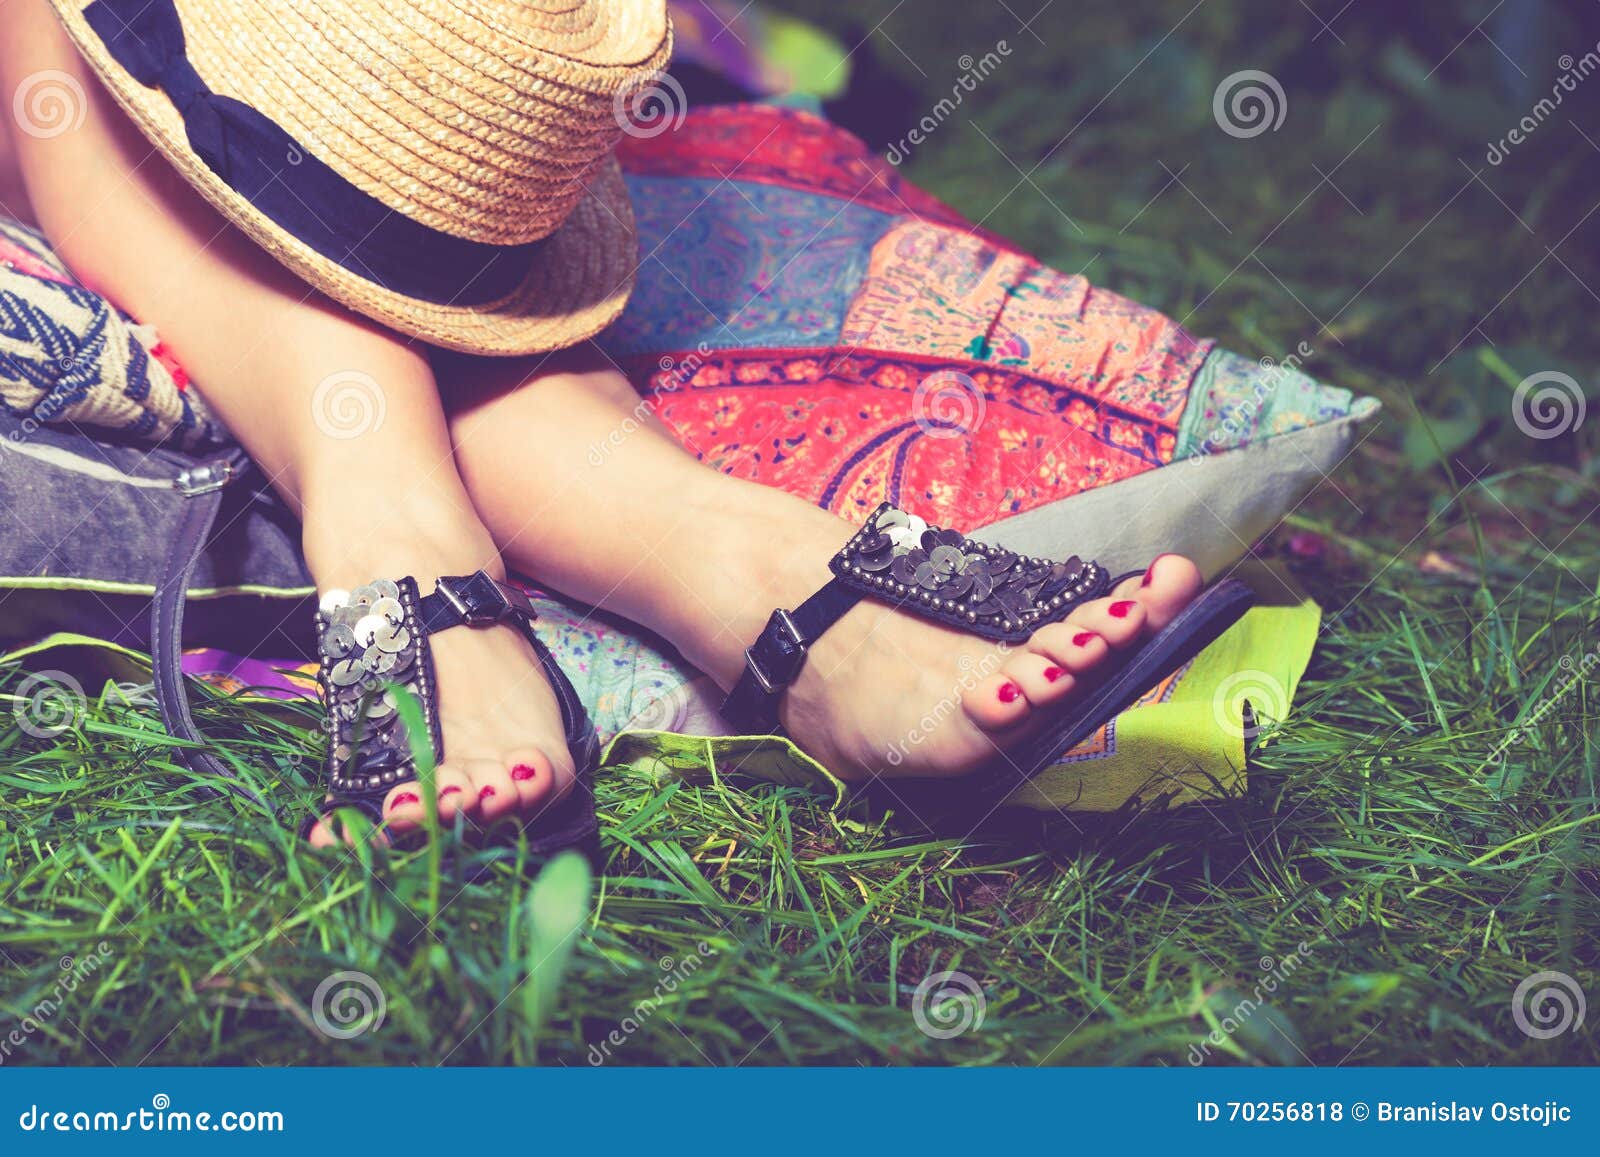 summer fashion sandals